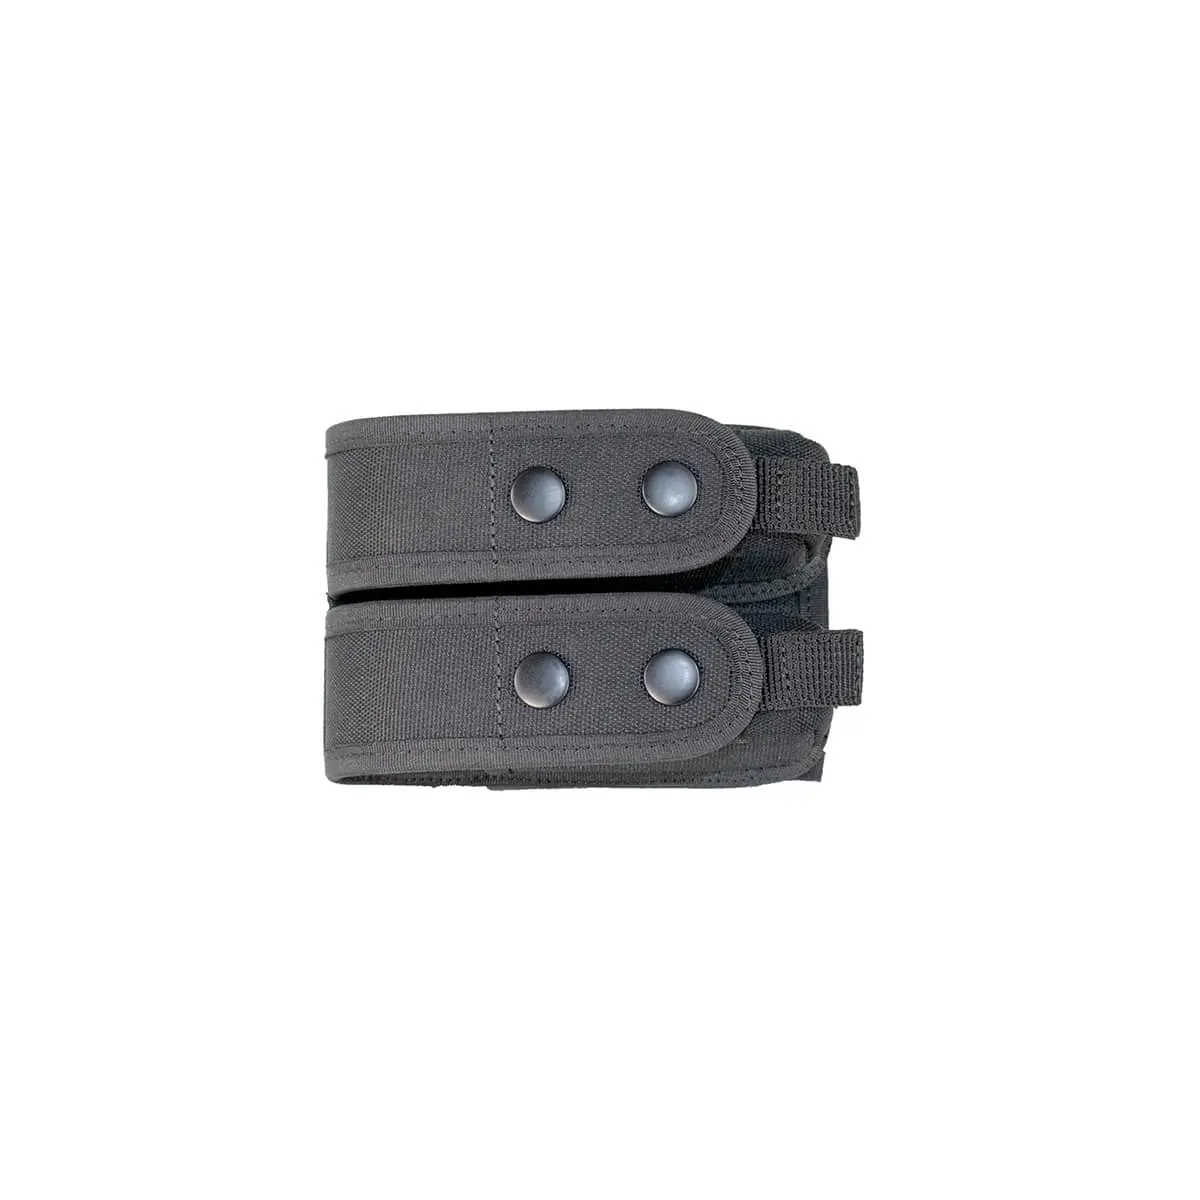 glock 17 22 magazine pouch 004 black belt loop 2